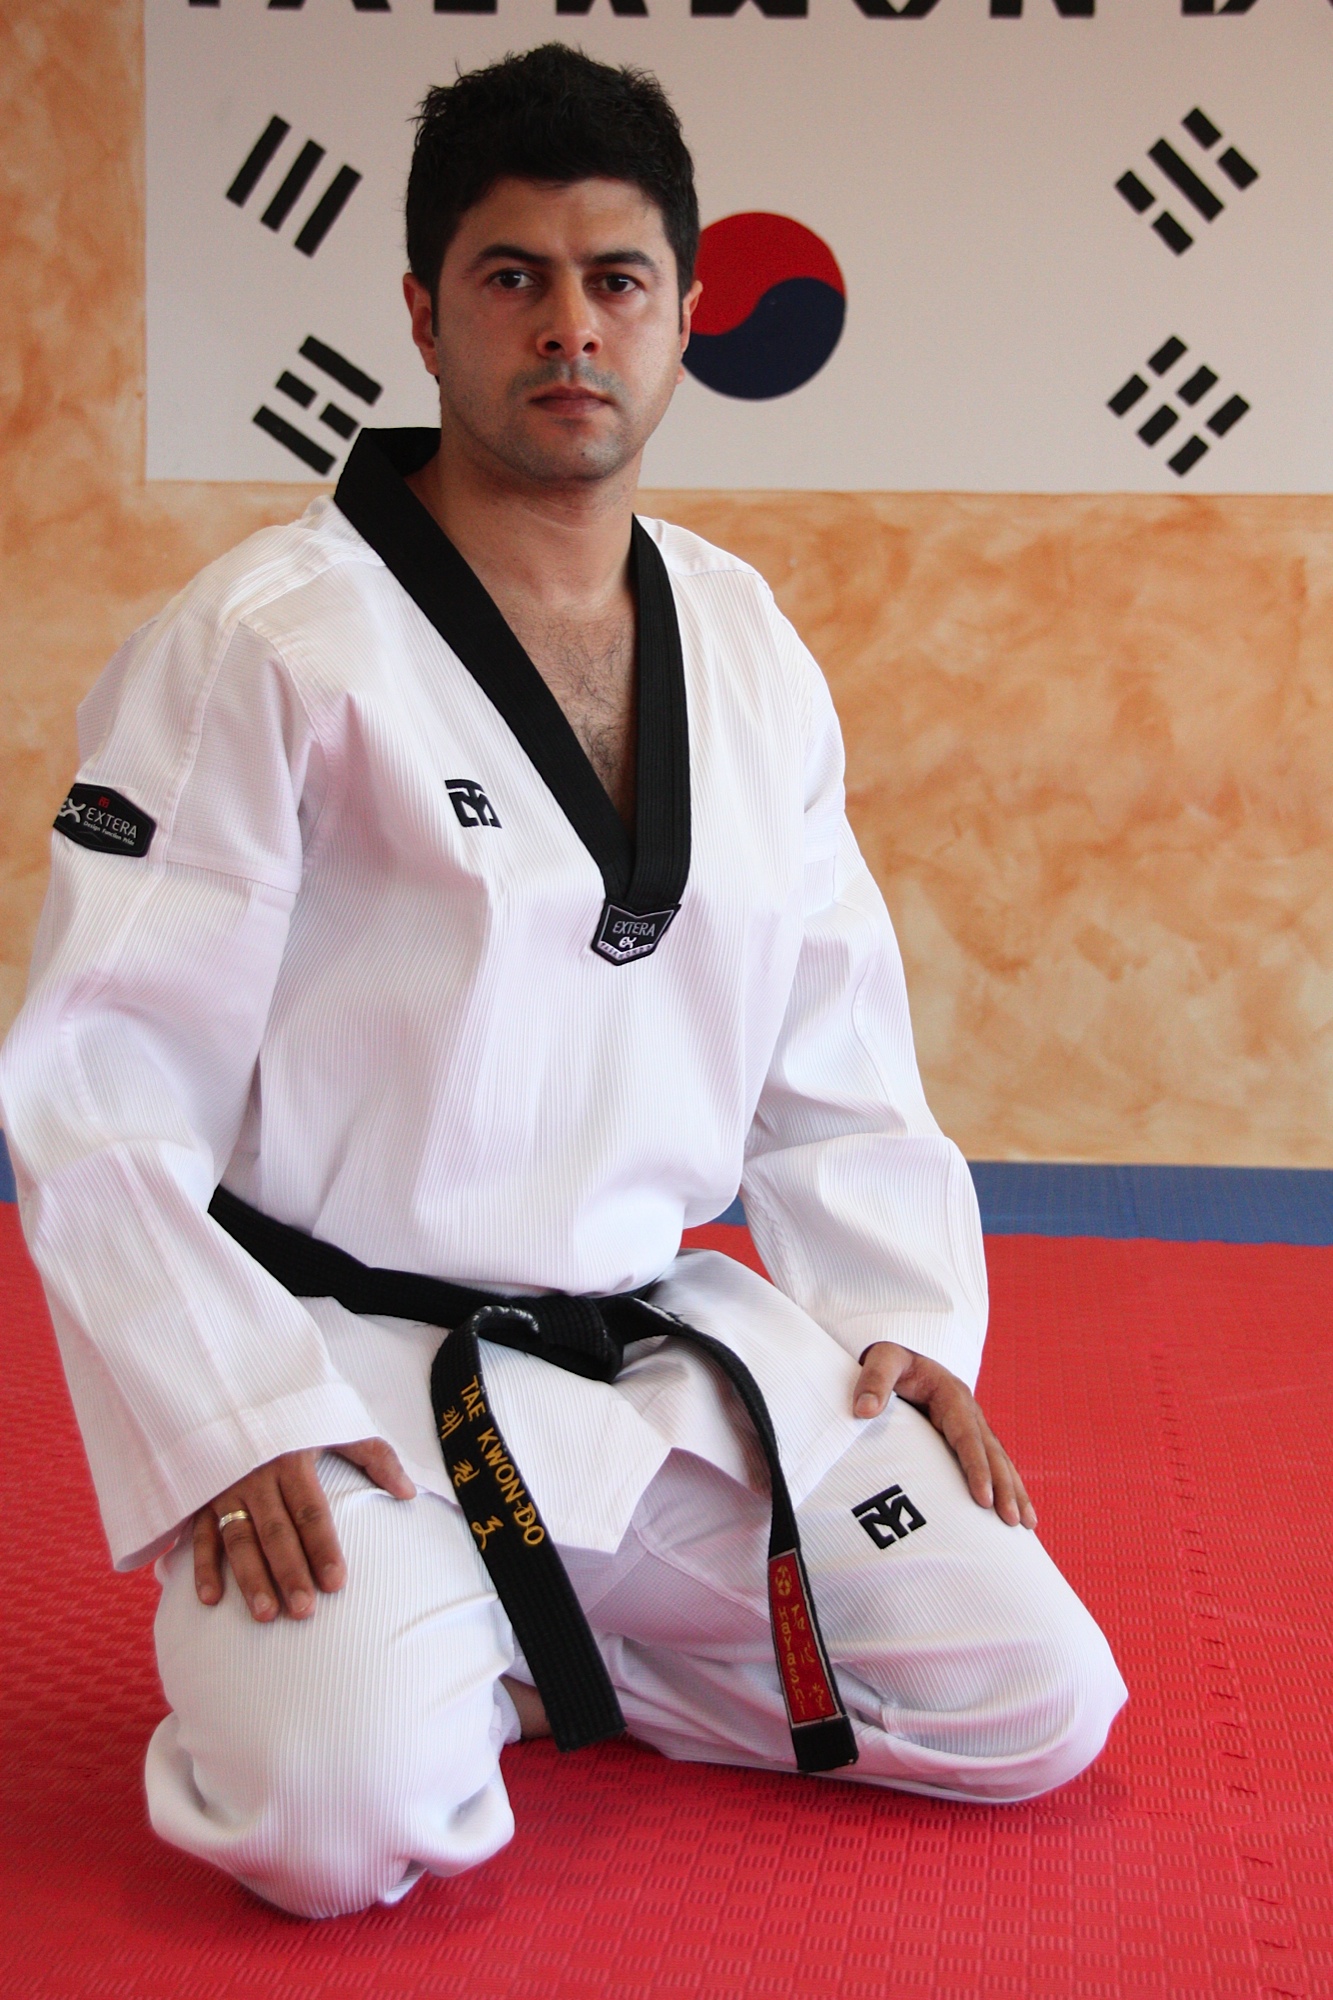 TaekwondoMeister01